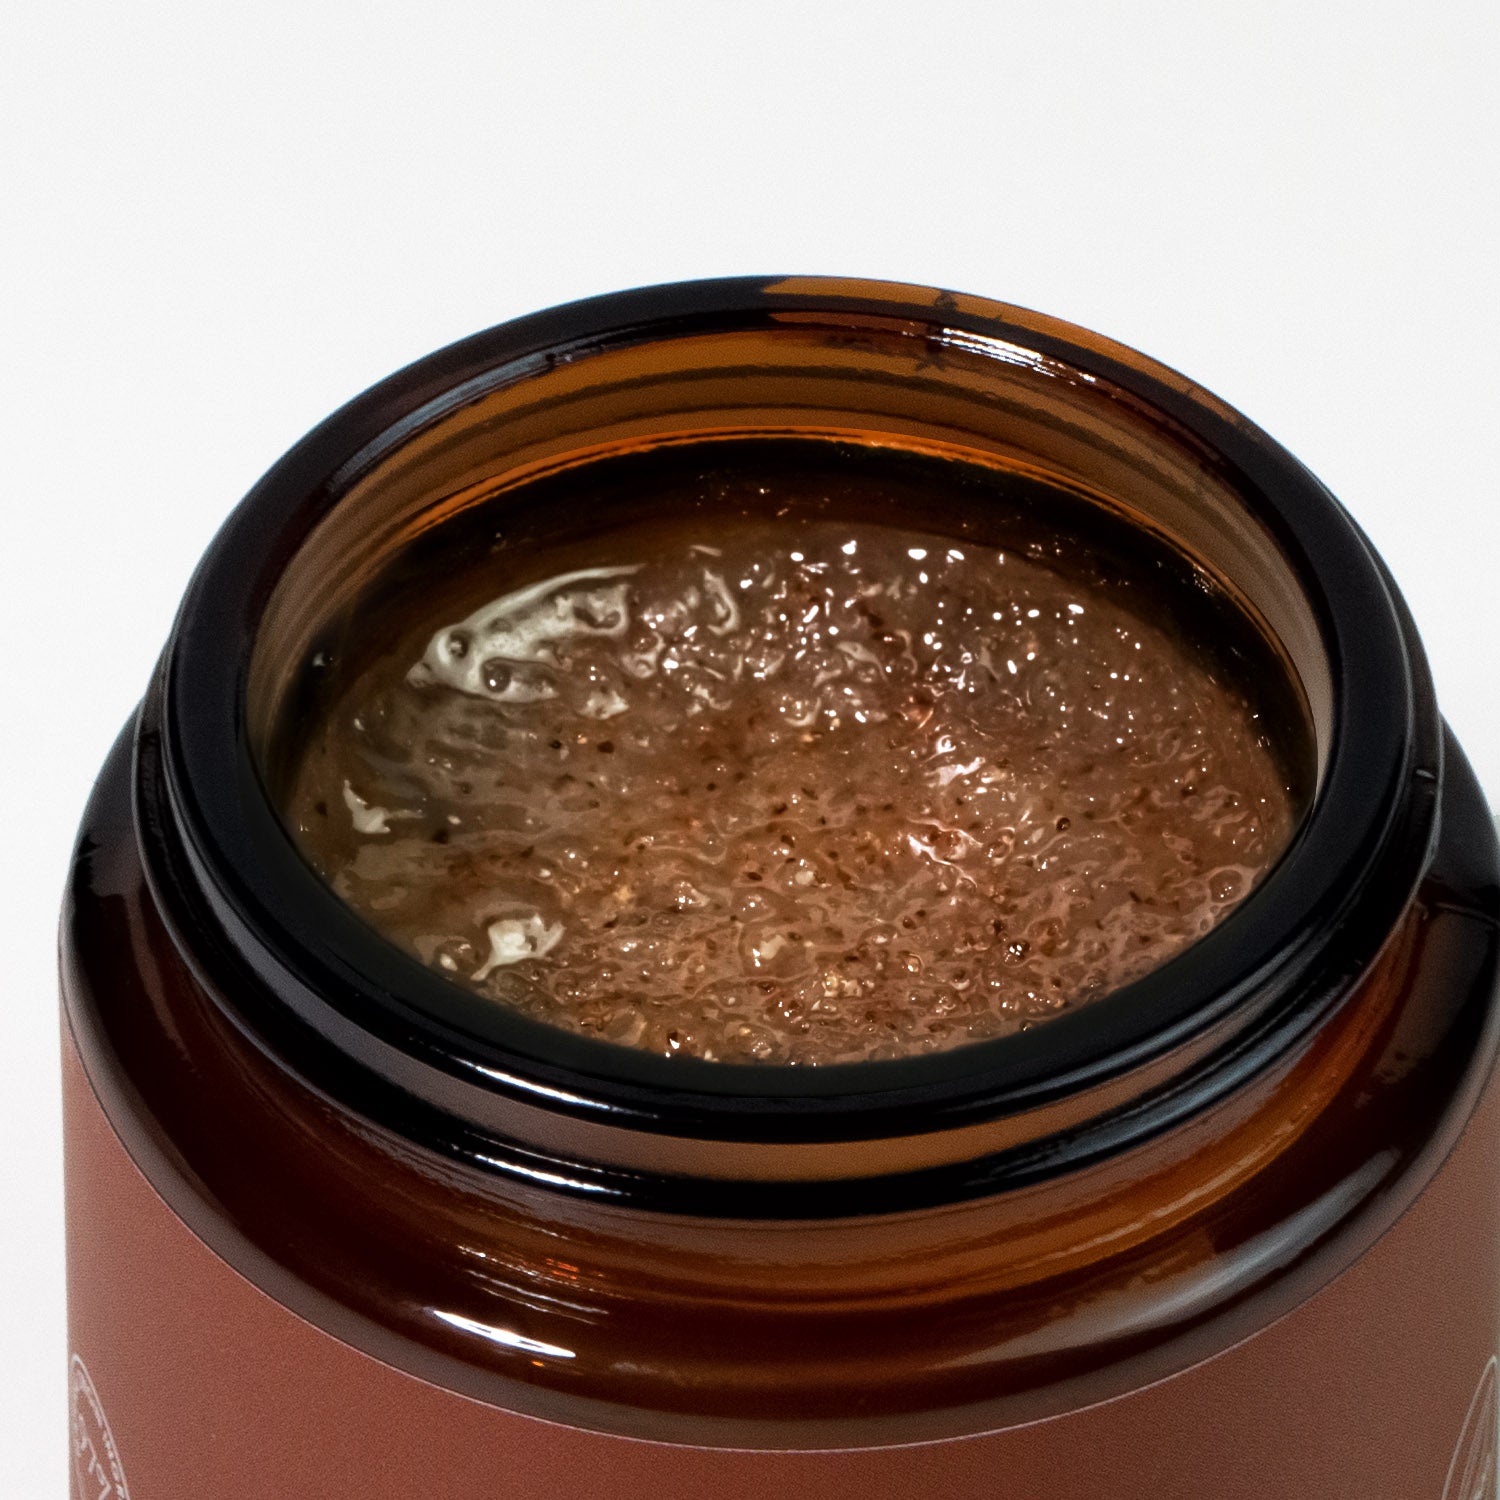 Vegan scrub σώματος με κόκκους από μαύρη ζάχαρη και πυρήνες βερίκοκου  EUPHORIA SPA CHOCOLATE SCRUB 100ml - Φόρμουλα βασισμένη σε 98.7% συστατικά φυσικής προέλευσης.